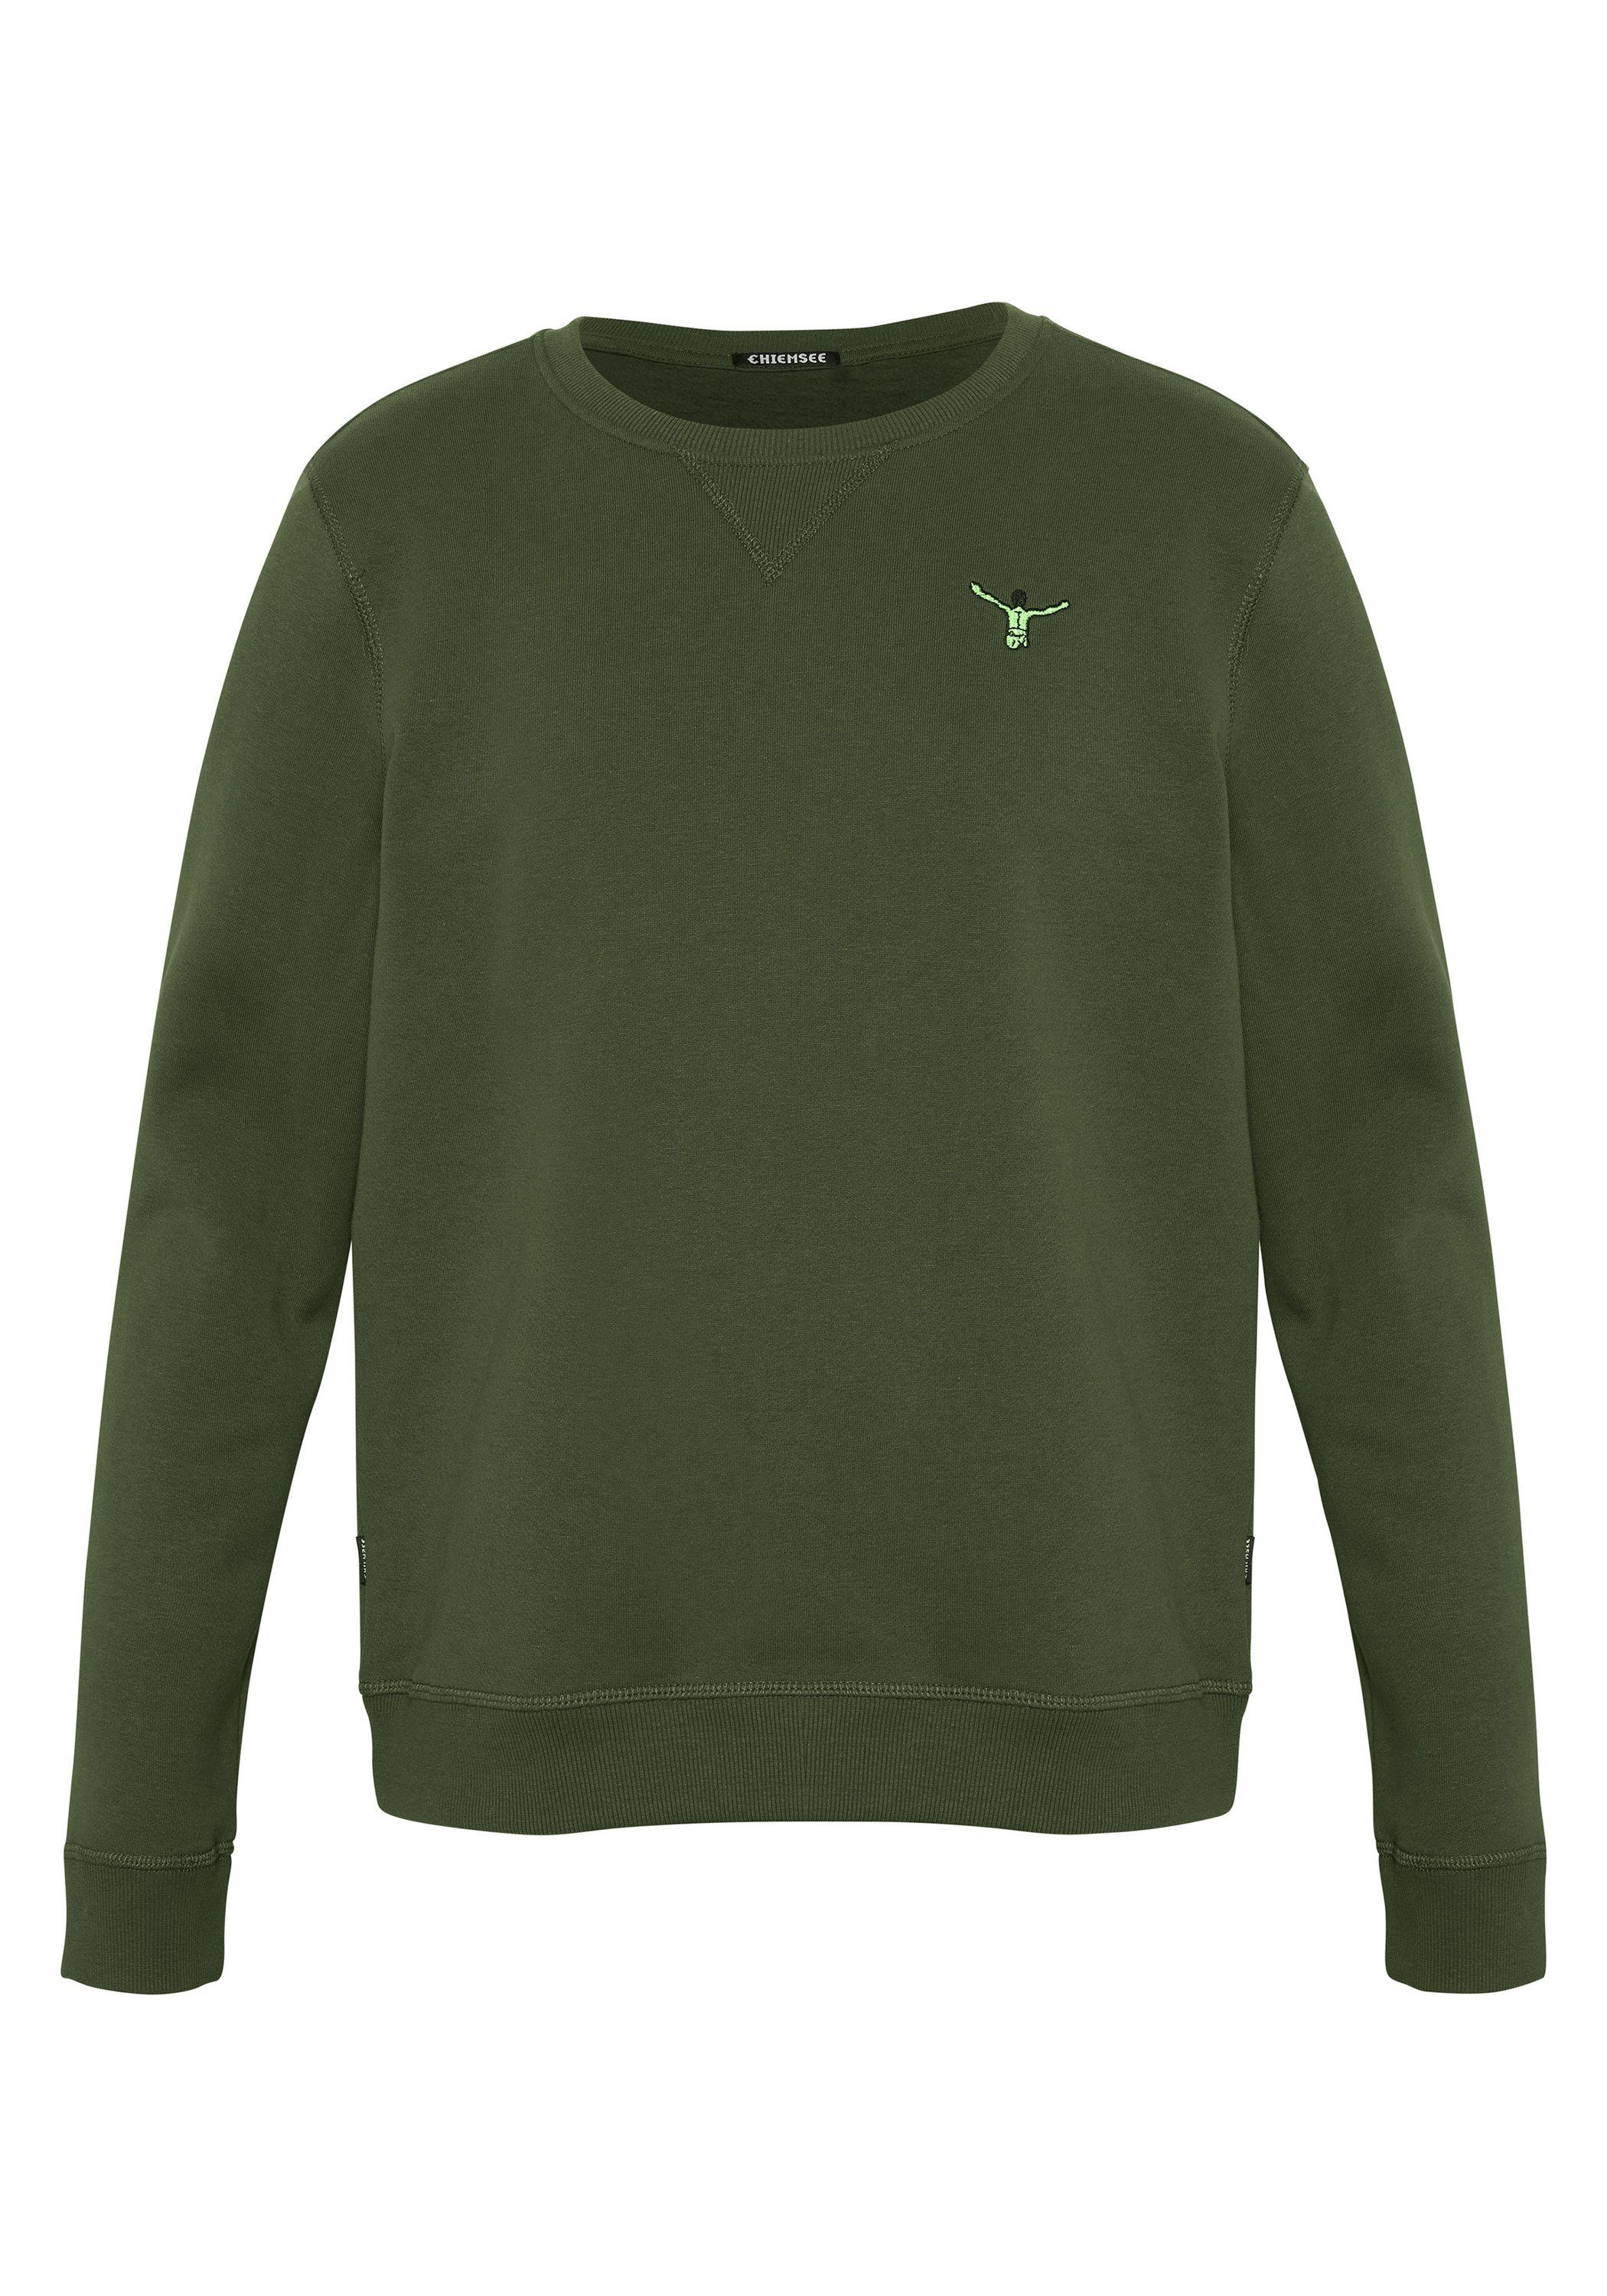 Chiemsee Sweatshirt Sweatshirt im coolen Retro-Design 1 19-0417 Kombu Green